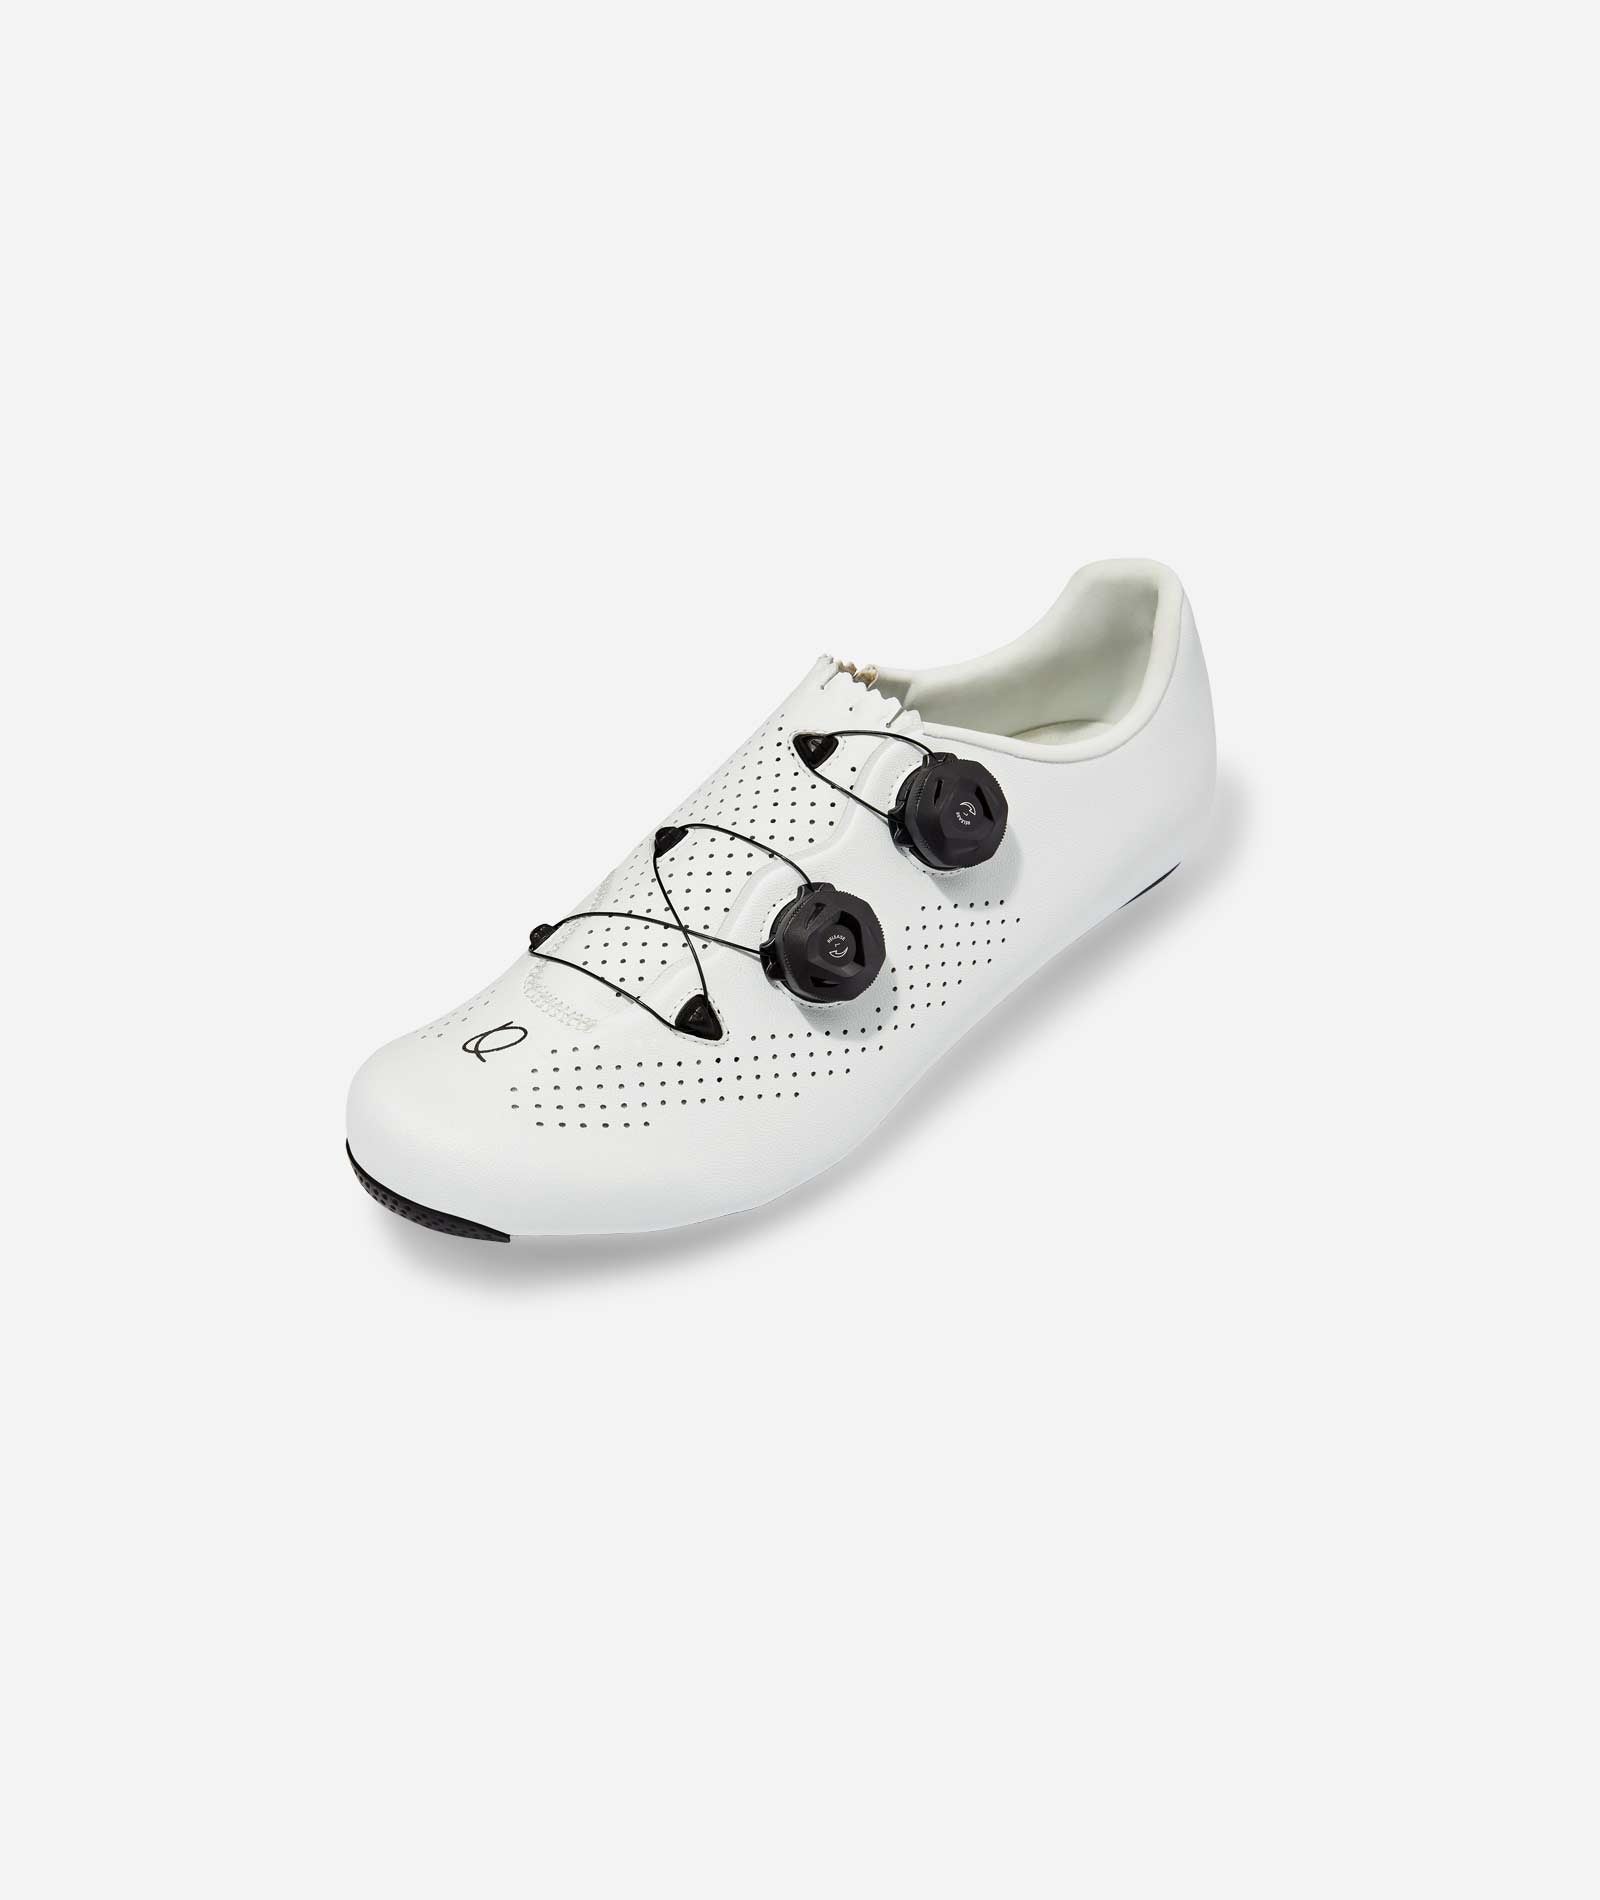 Mono II Road Shoes - White